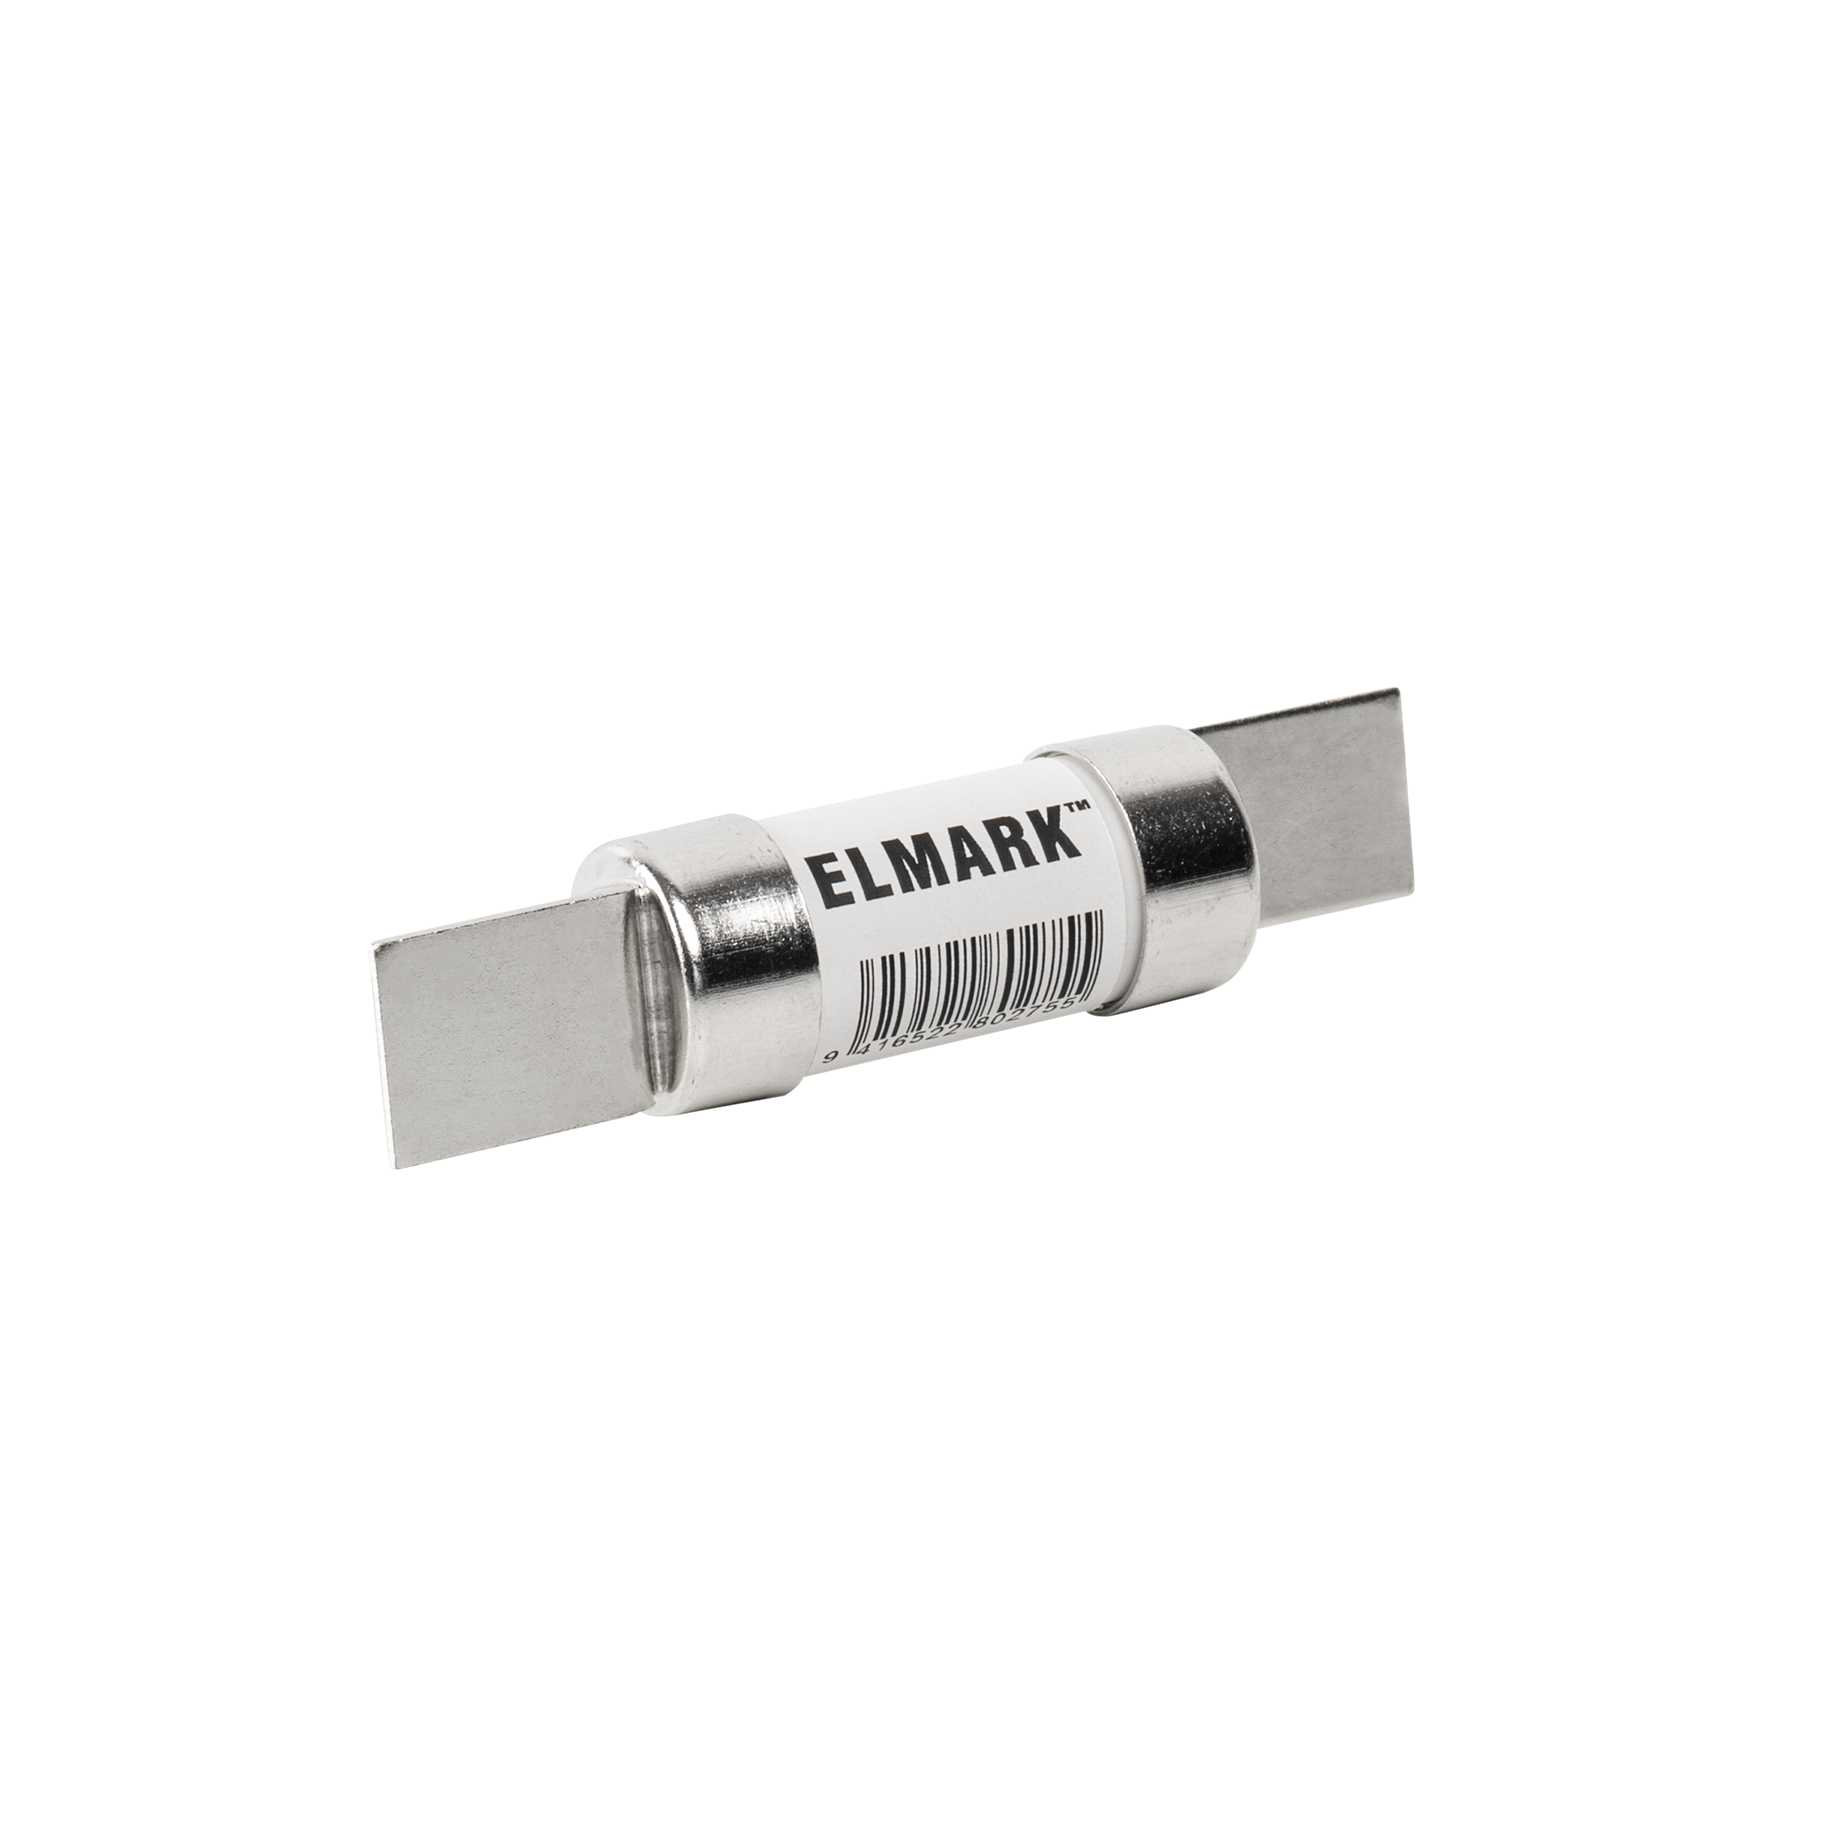 ELMARK HRC FUSE LINK STAGGERED TAG 32A 550V 32G06